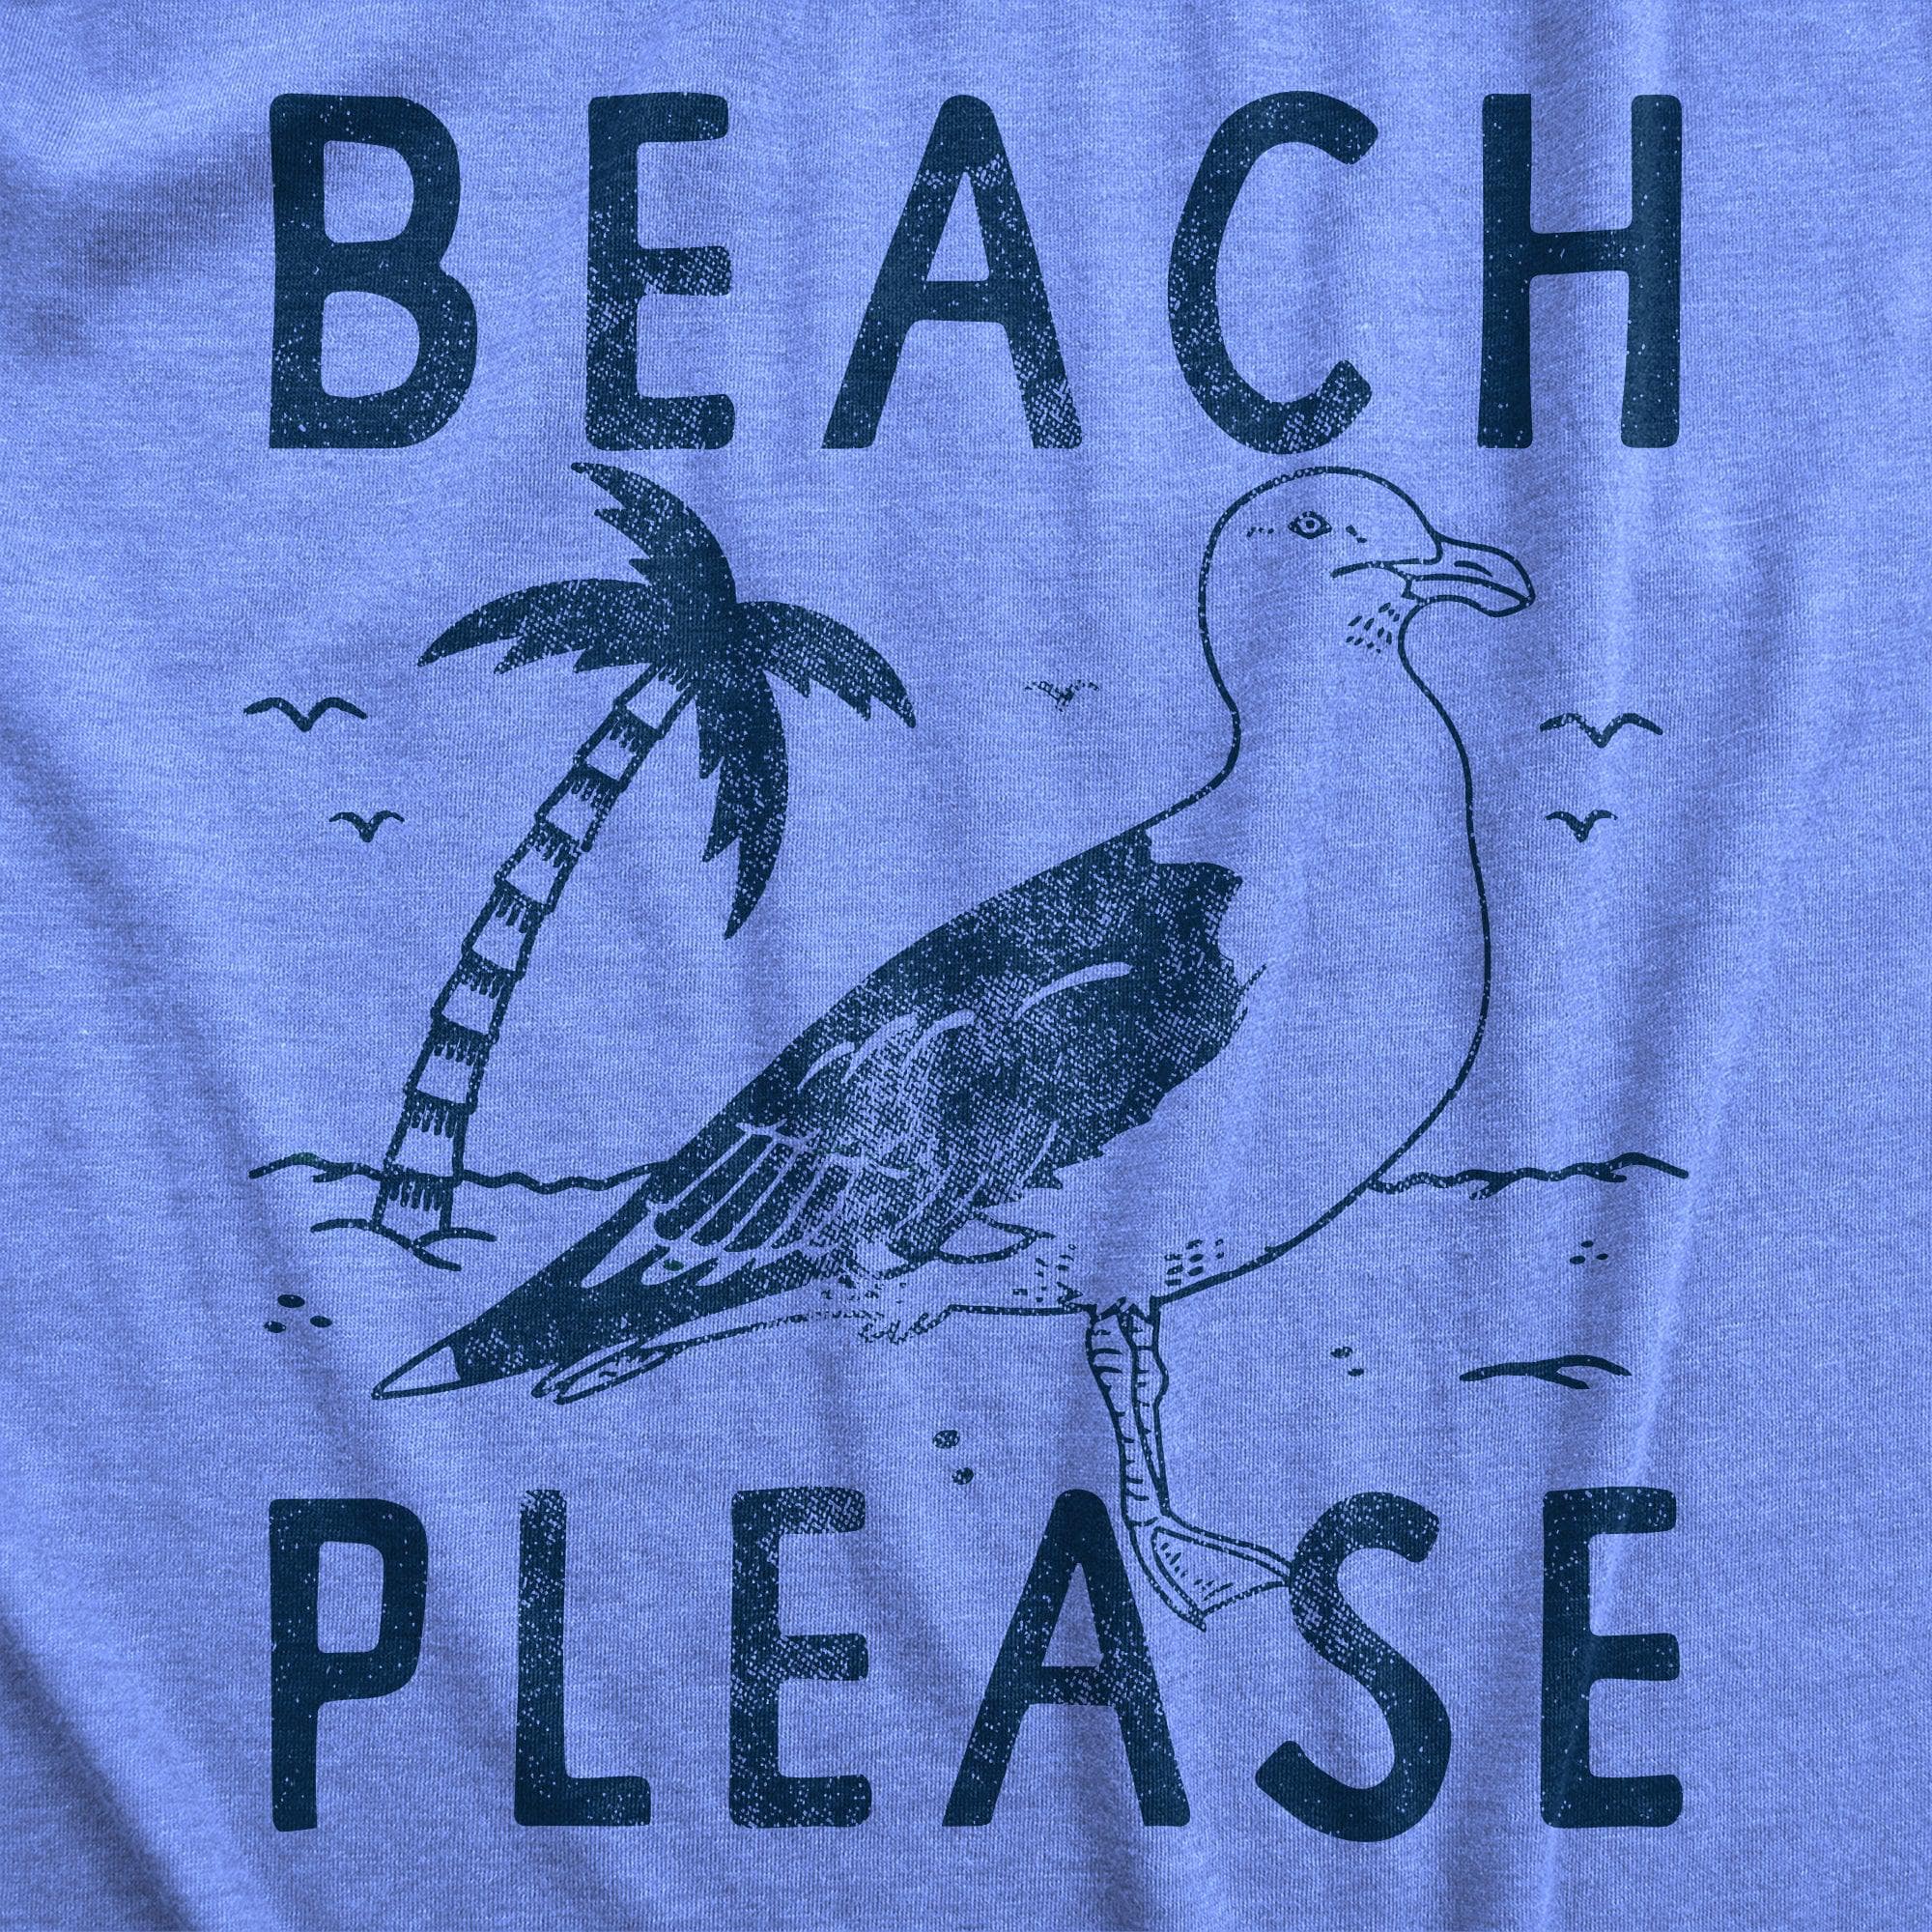 Beach Please Women's Tshirt  -  Crazy Dog T-Shirts